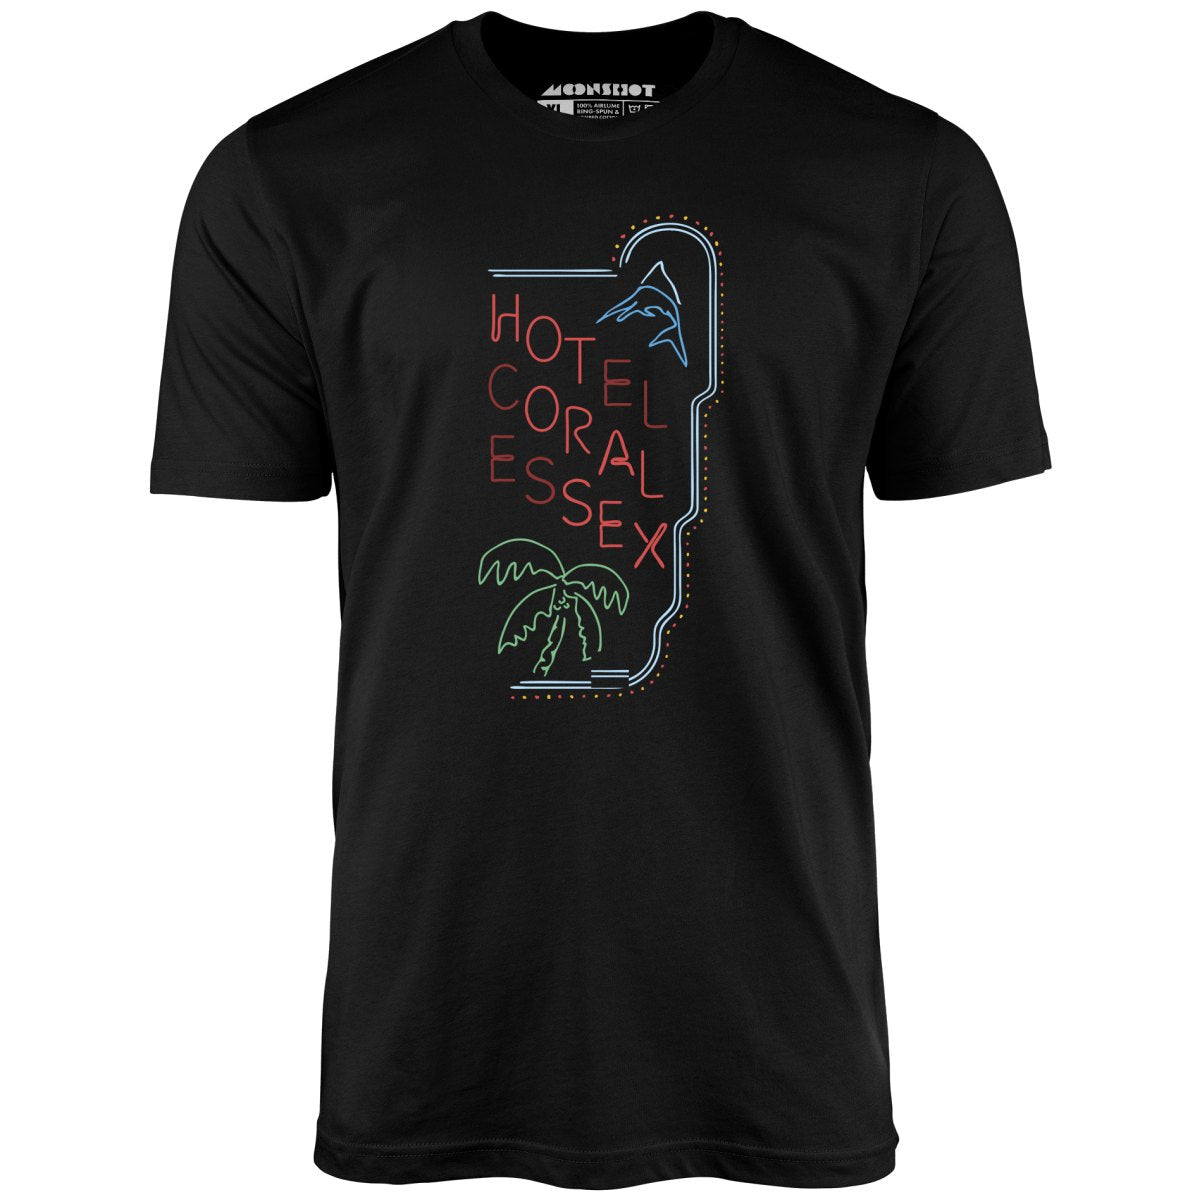 Hotel Coral Essex - Unisex T-Shirt